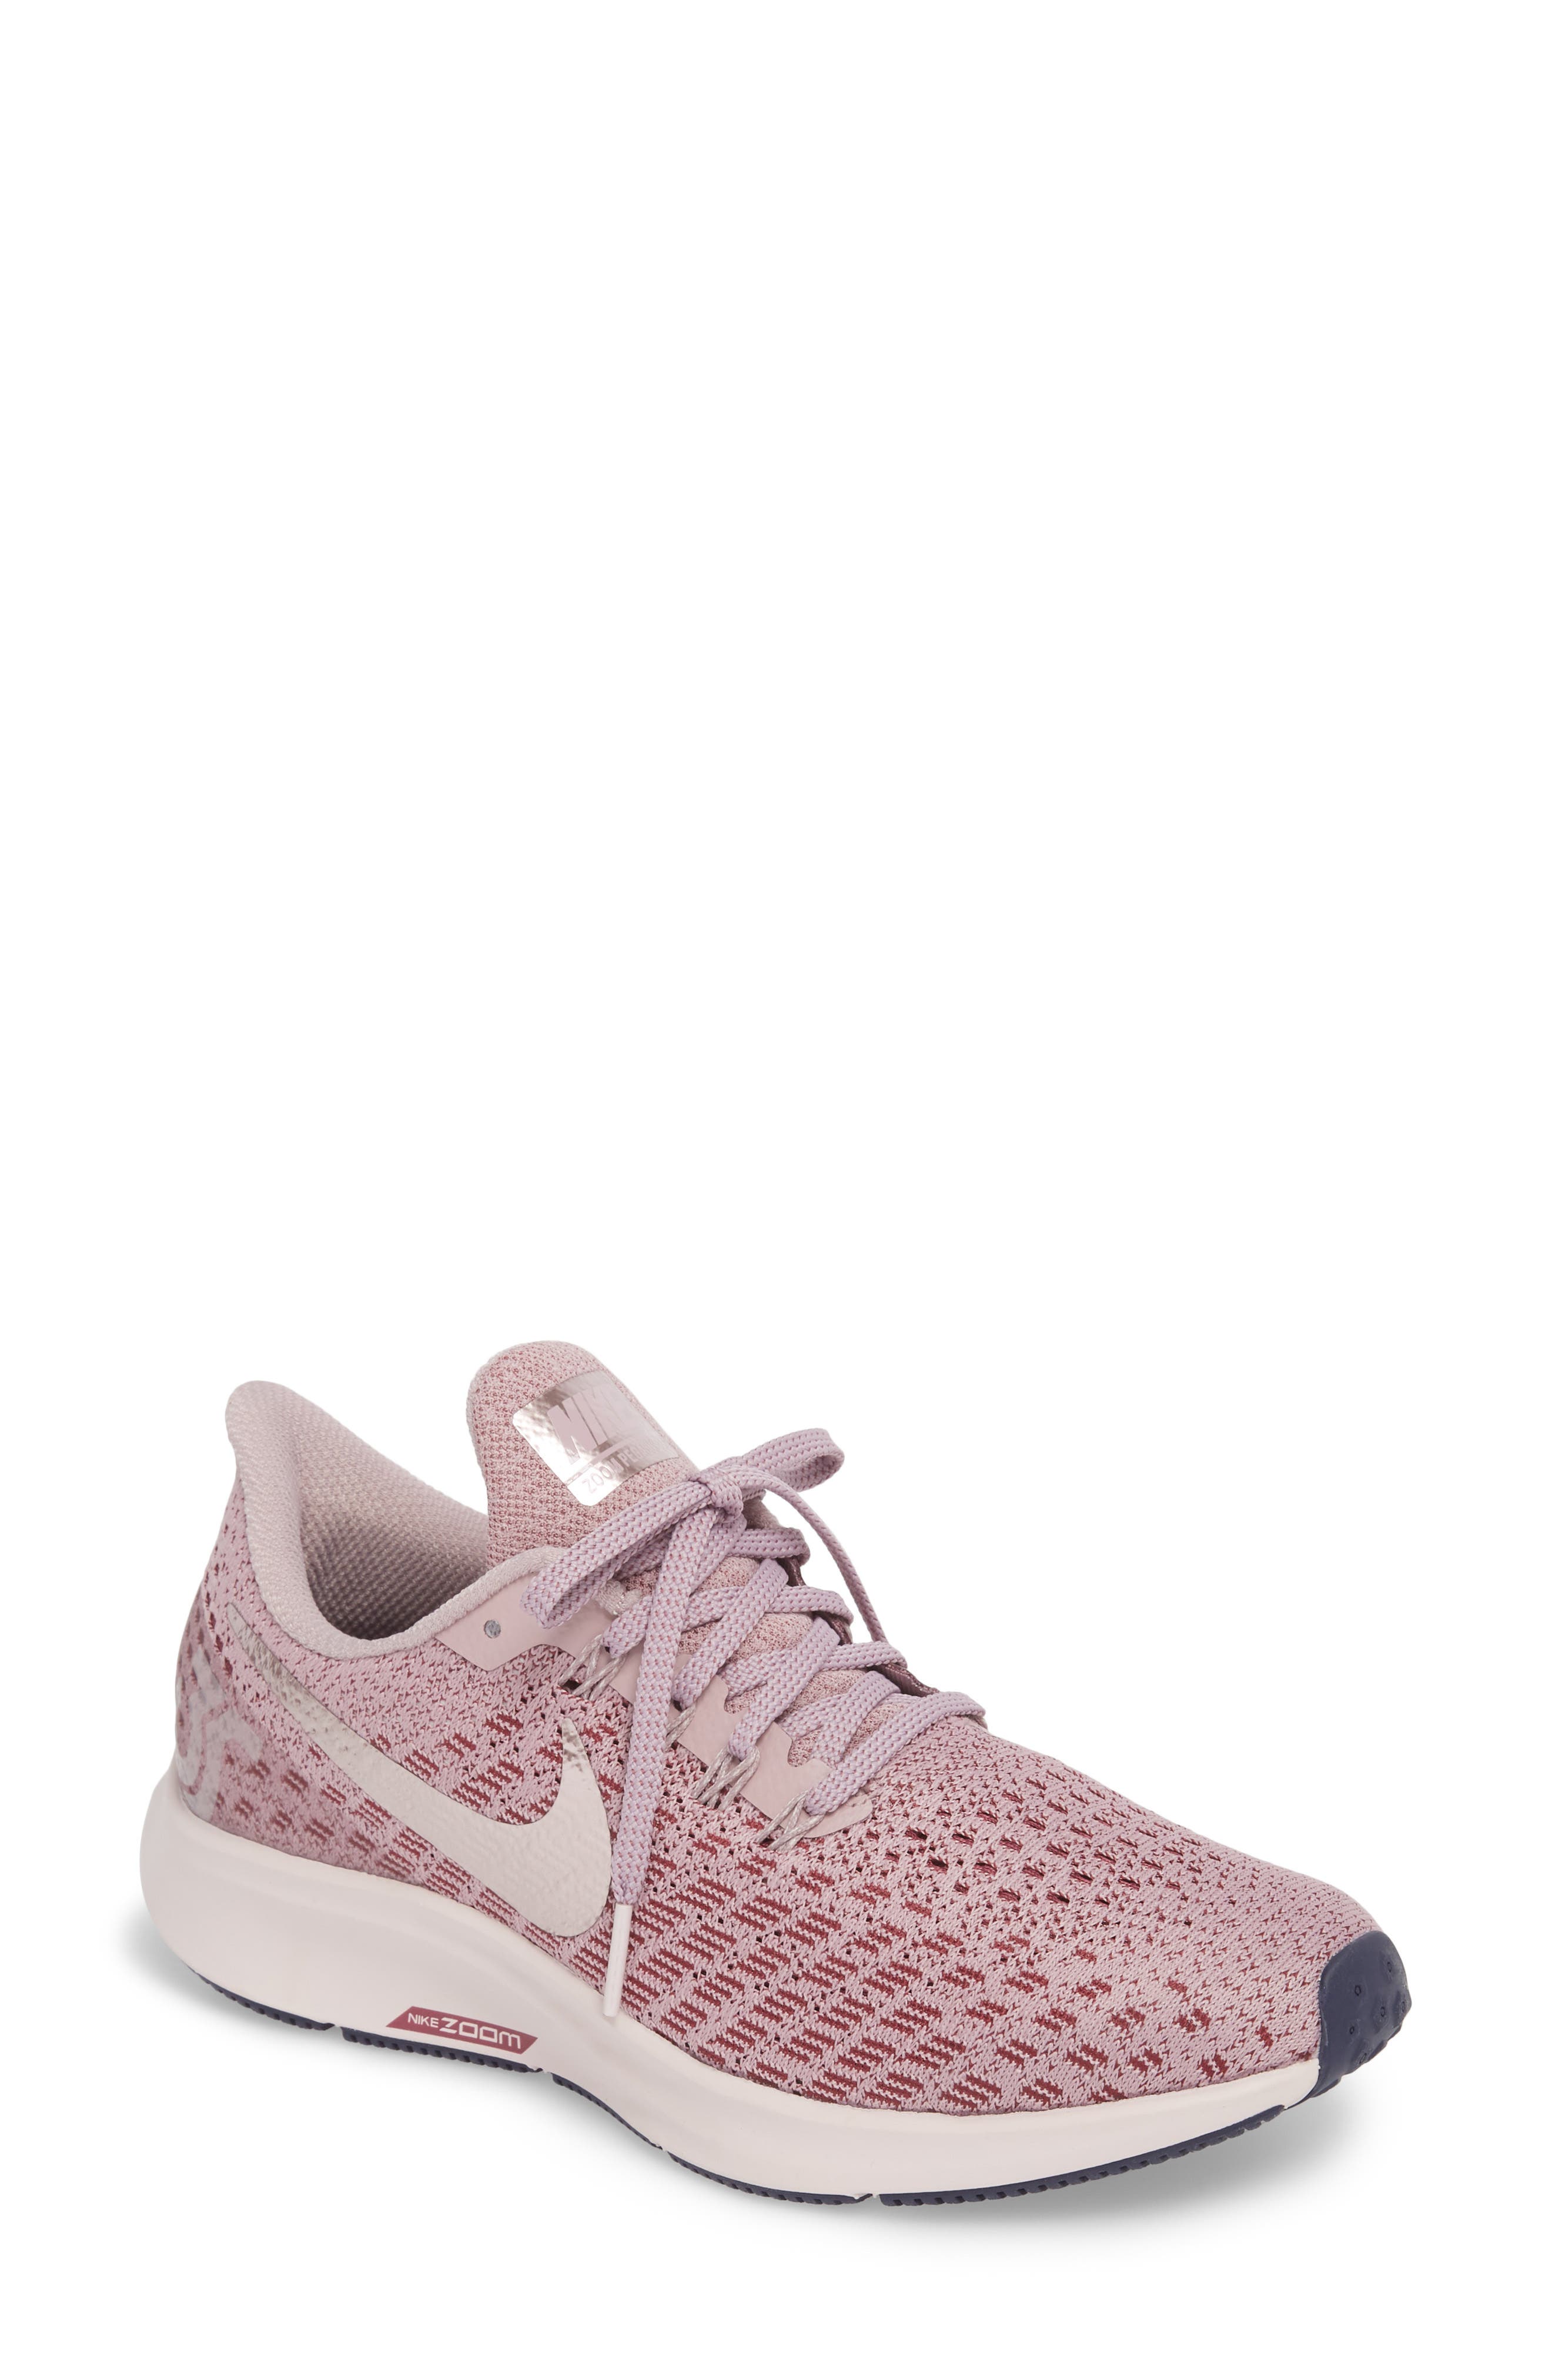 UPC 883418023829 product image for Women's Nike Air Zoom Pegasus 35 Running Shoe, Size 7.5 M - Pink | upcitemdb.com